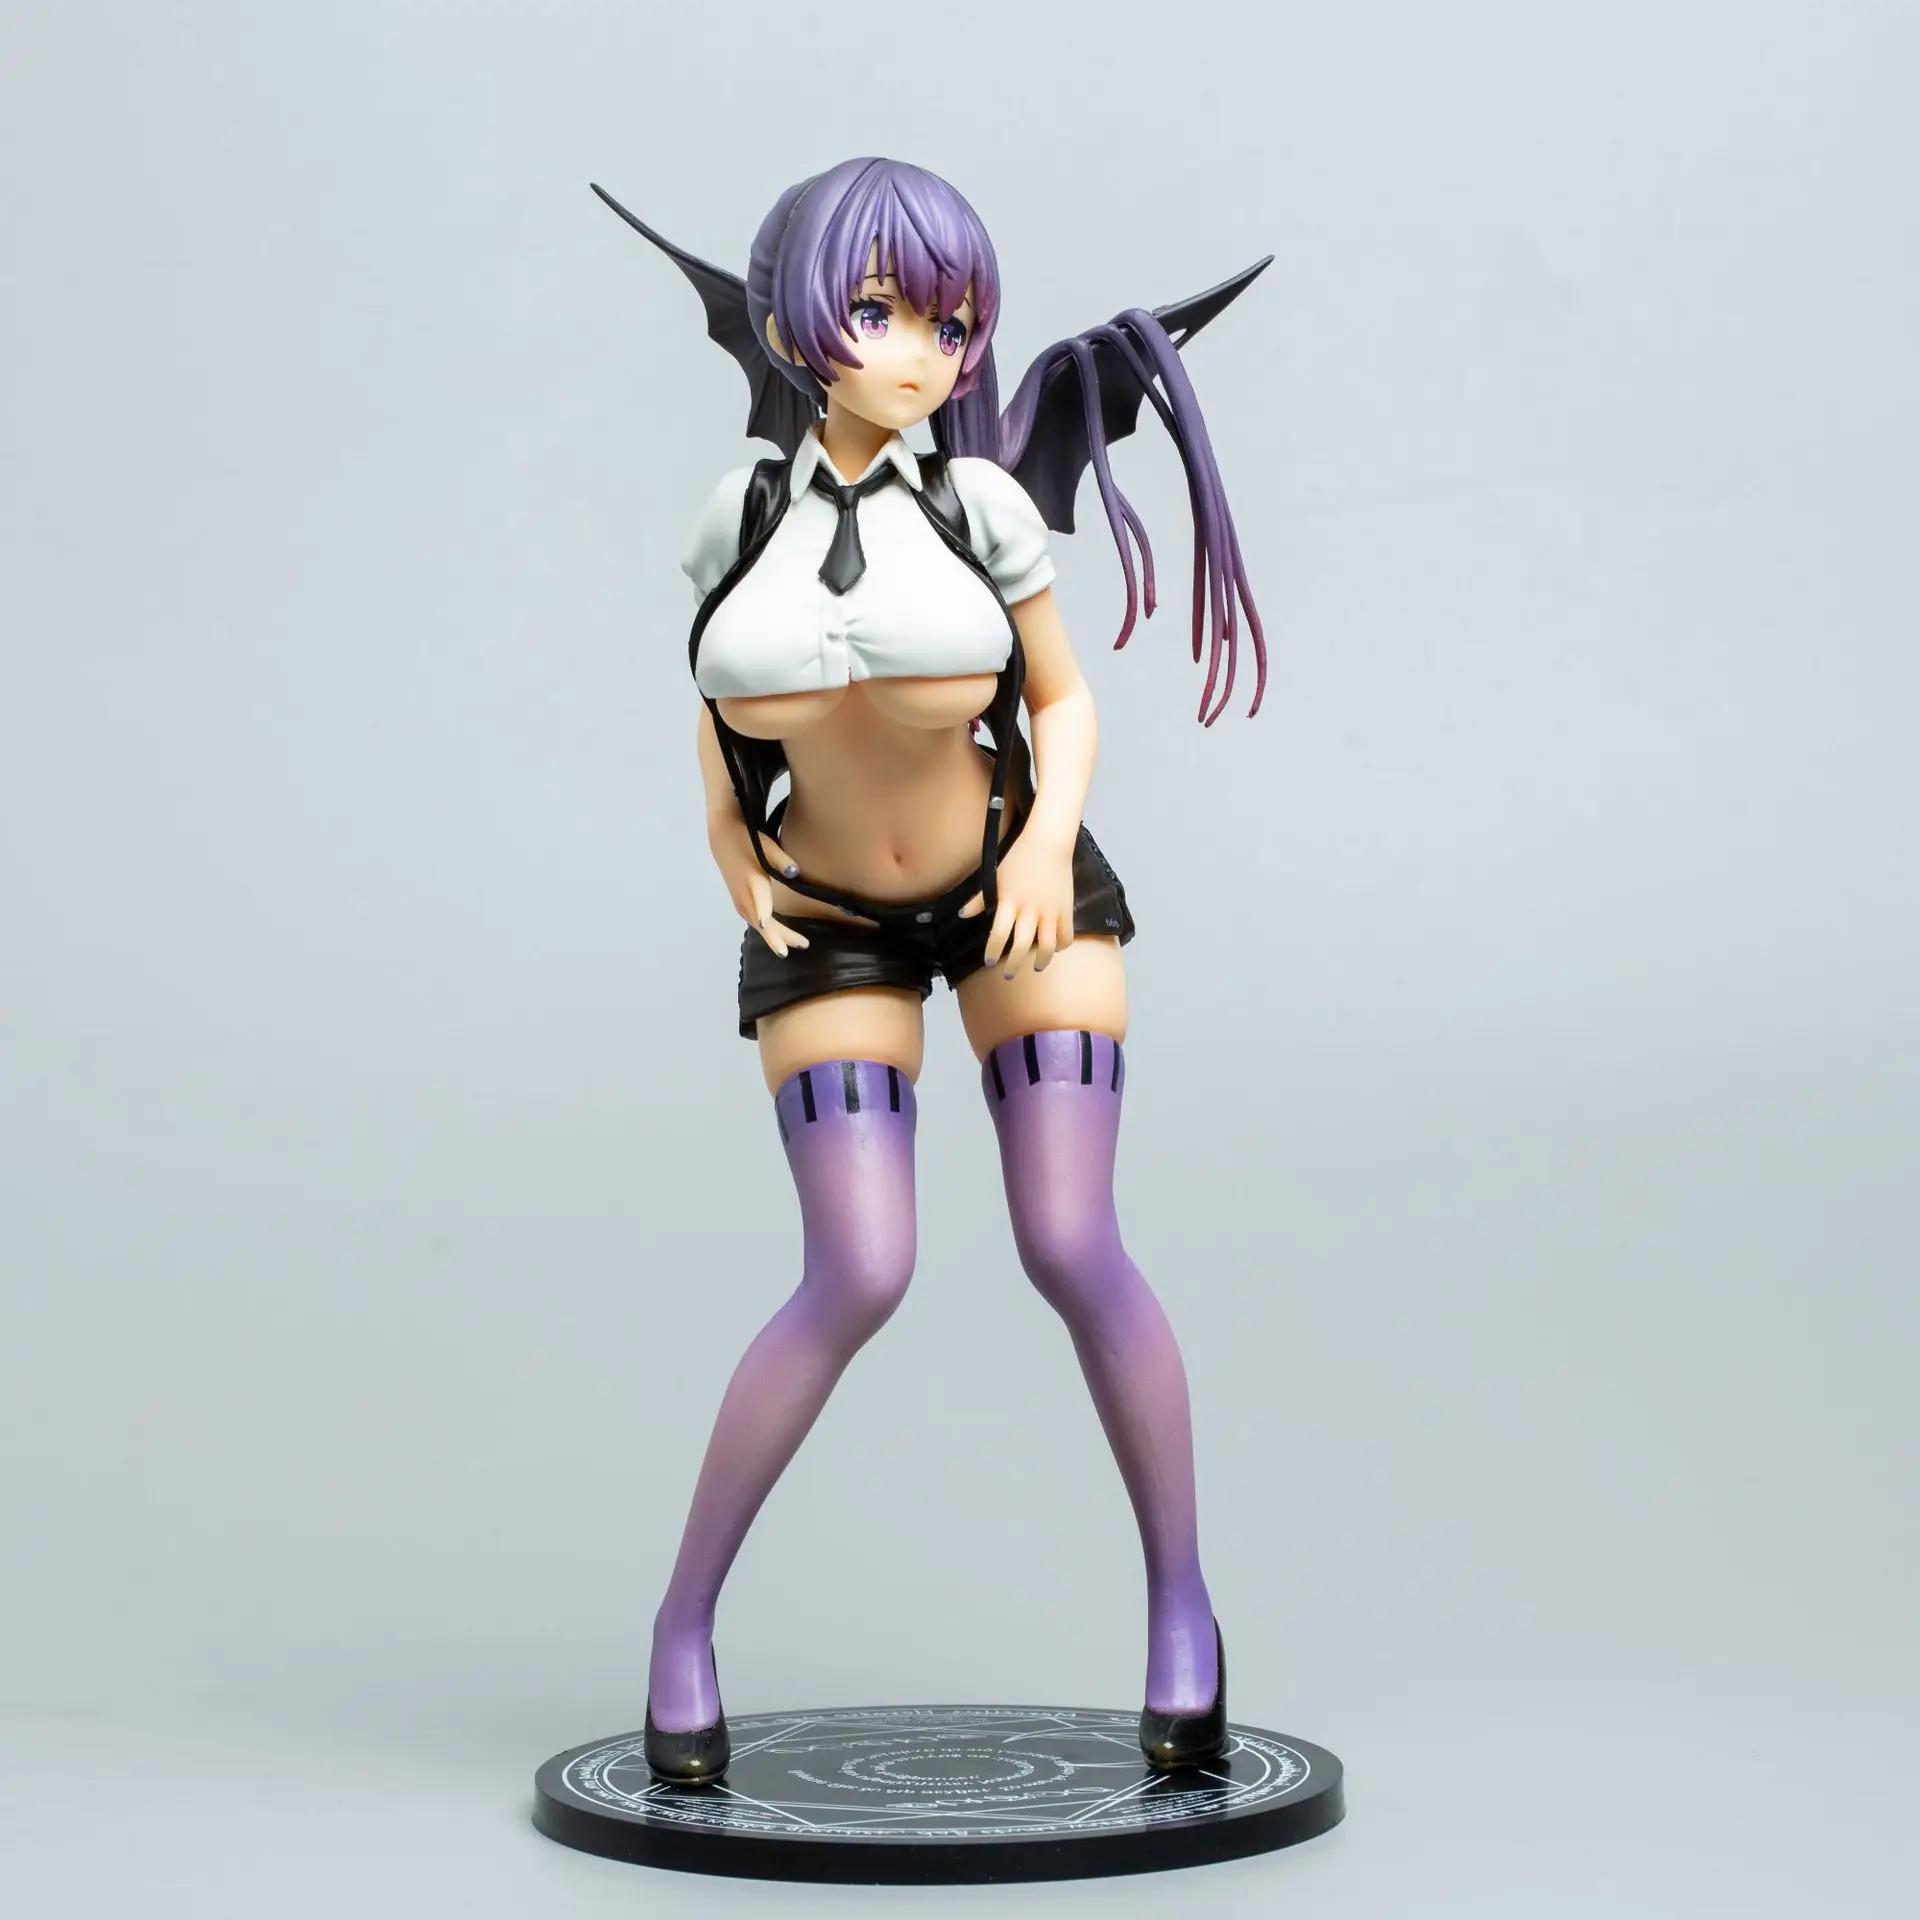 

25cm anime toy beautiful girl little devil Motaro standing posture gentleman version action figure model toy collection